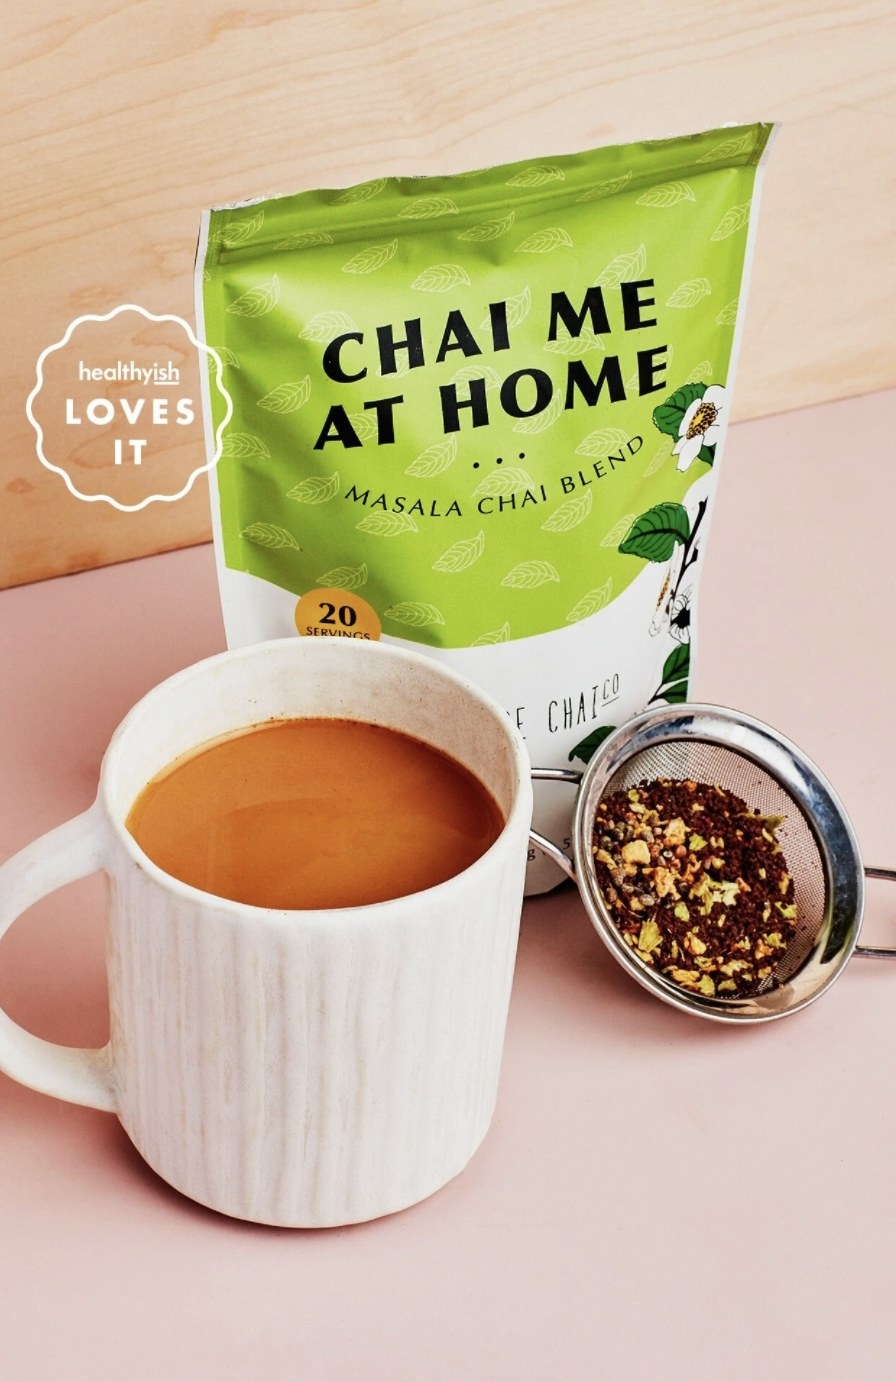 A mug with the masala chai tea sitting next to the bag and loose leaf tea blend